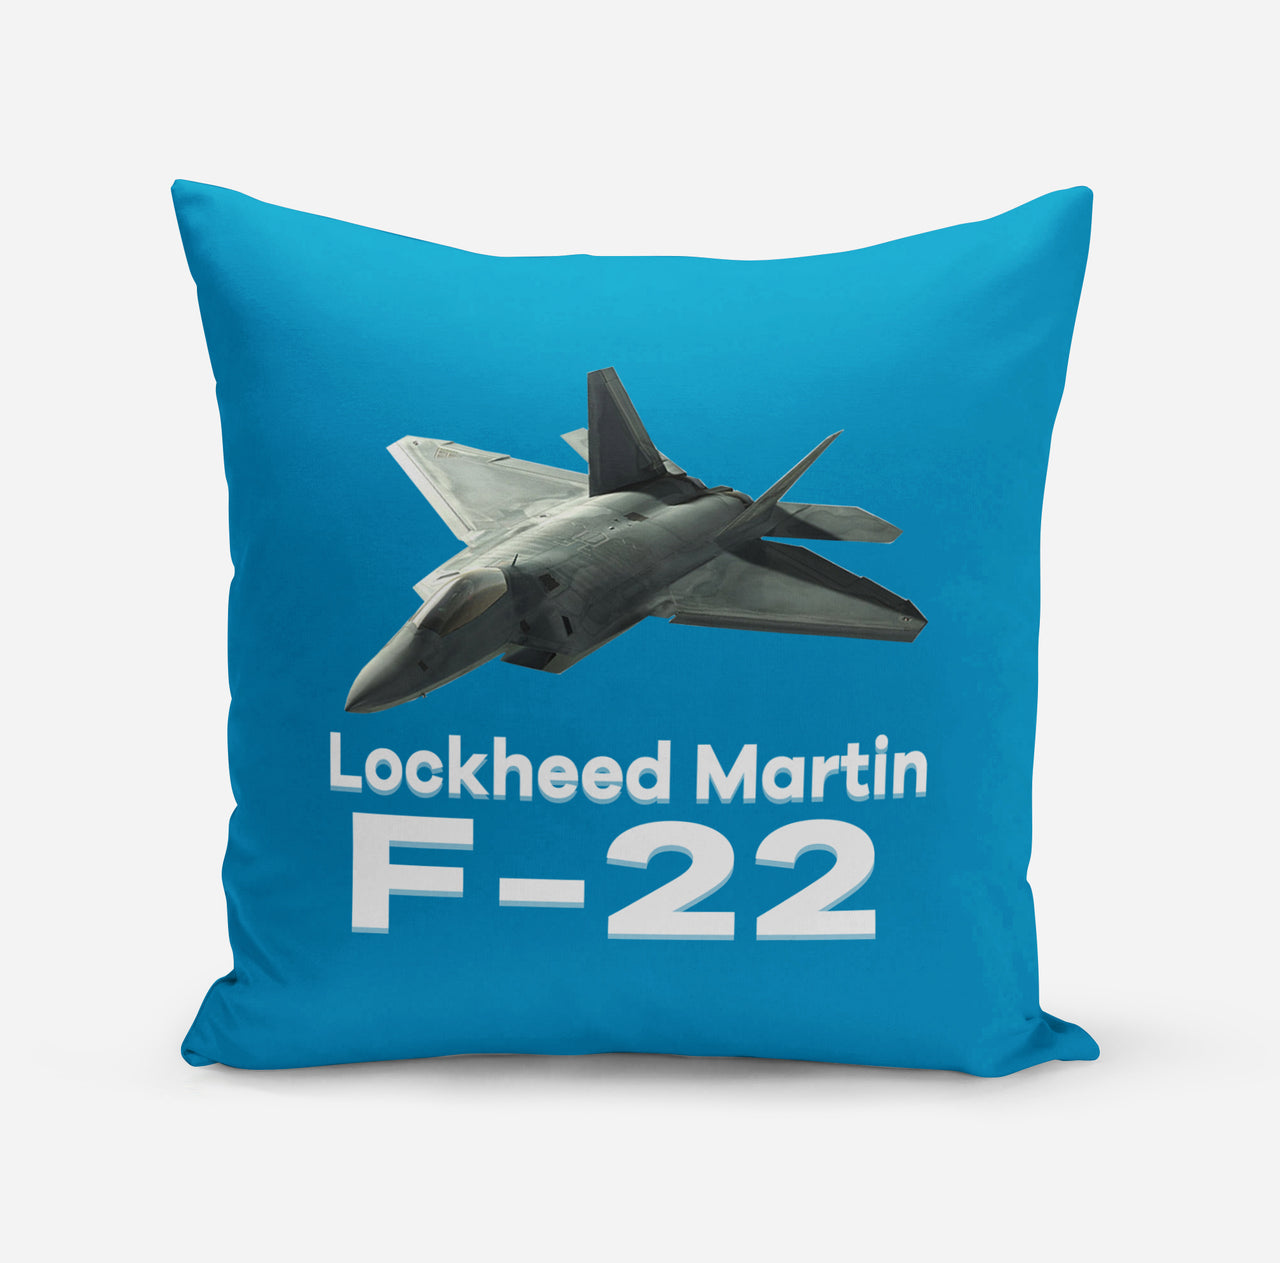 The Lockheed Martin F22 Designed Pillows